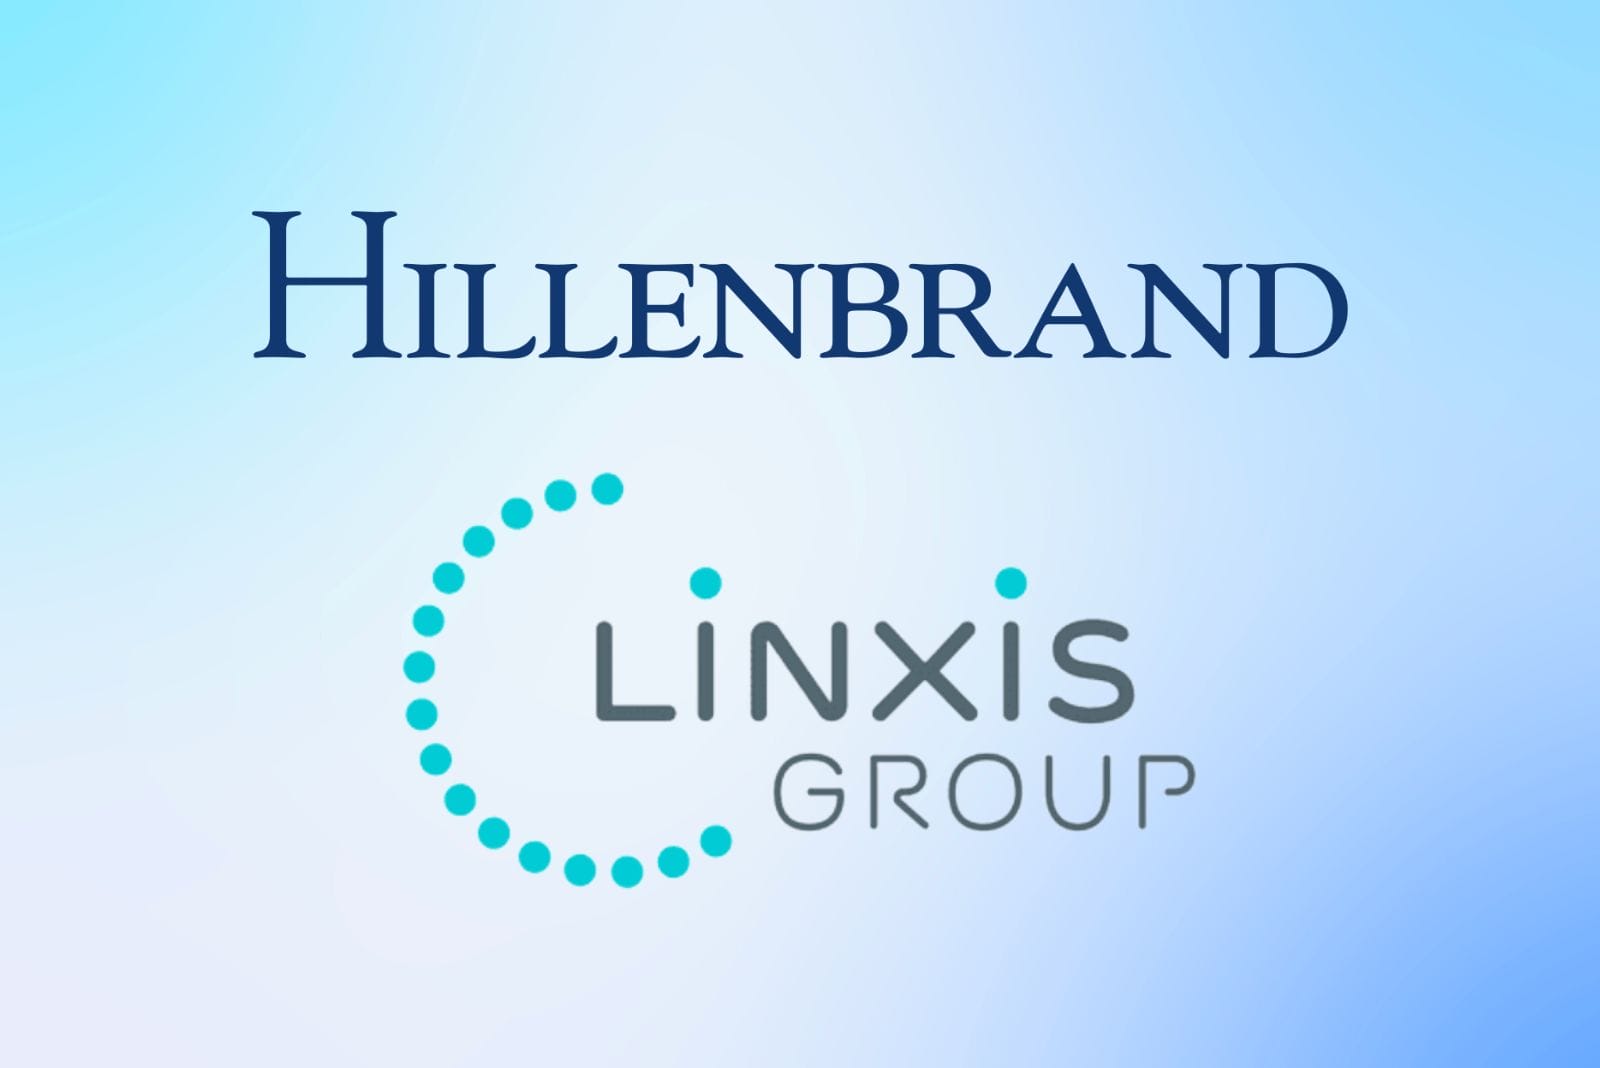 Linxis Group